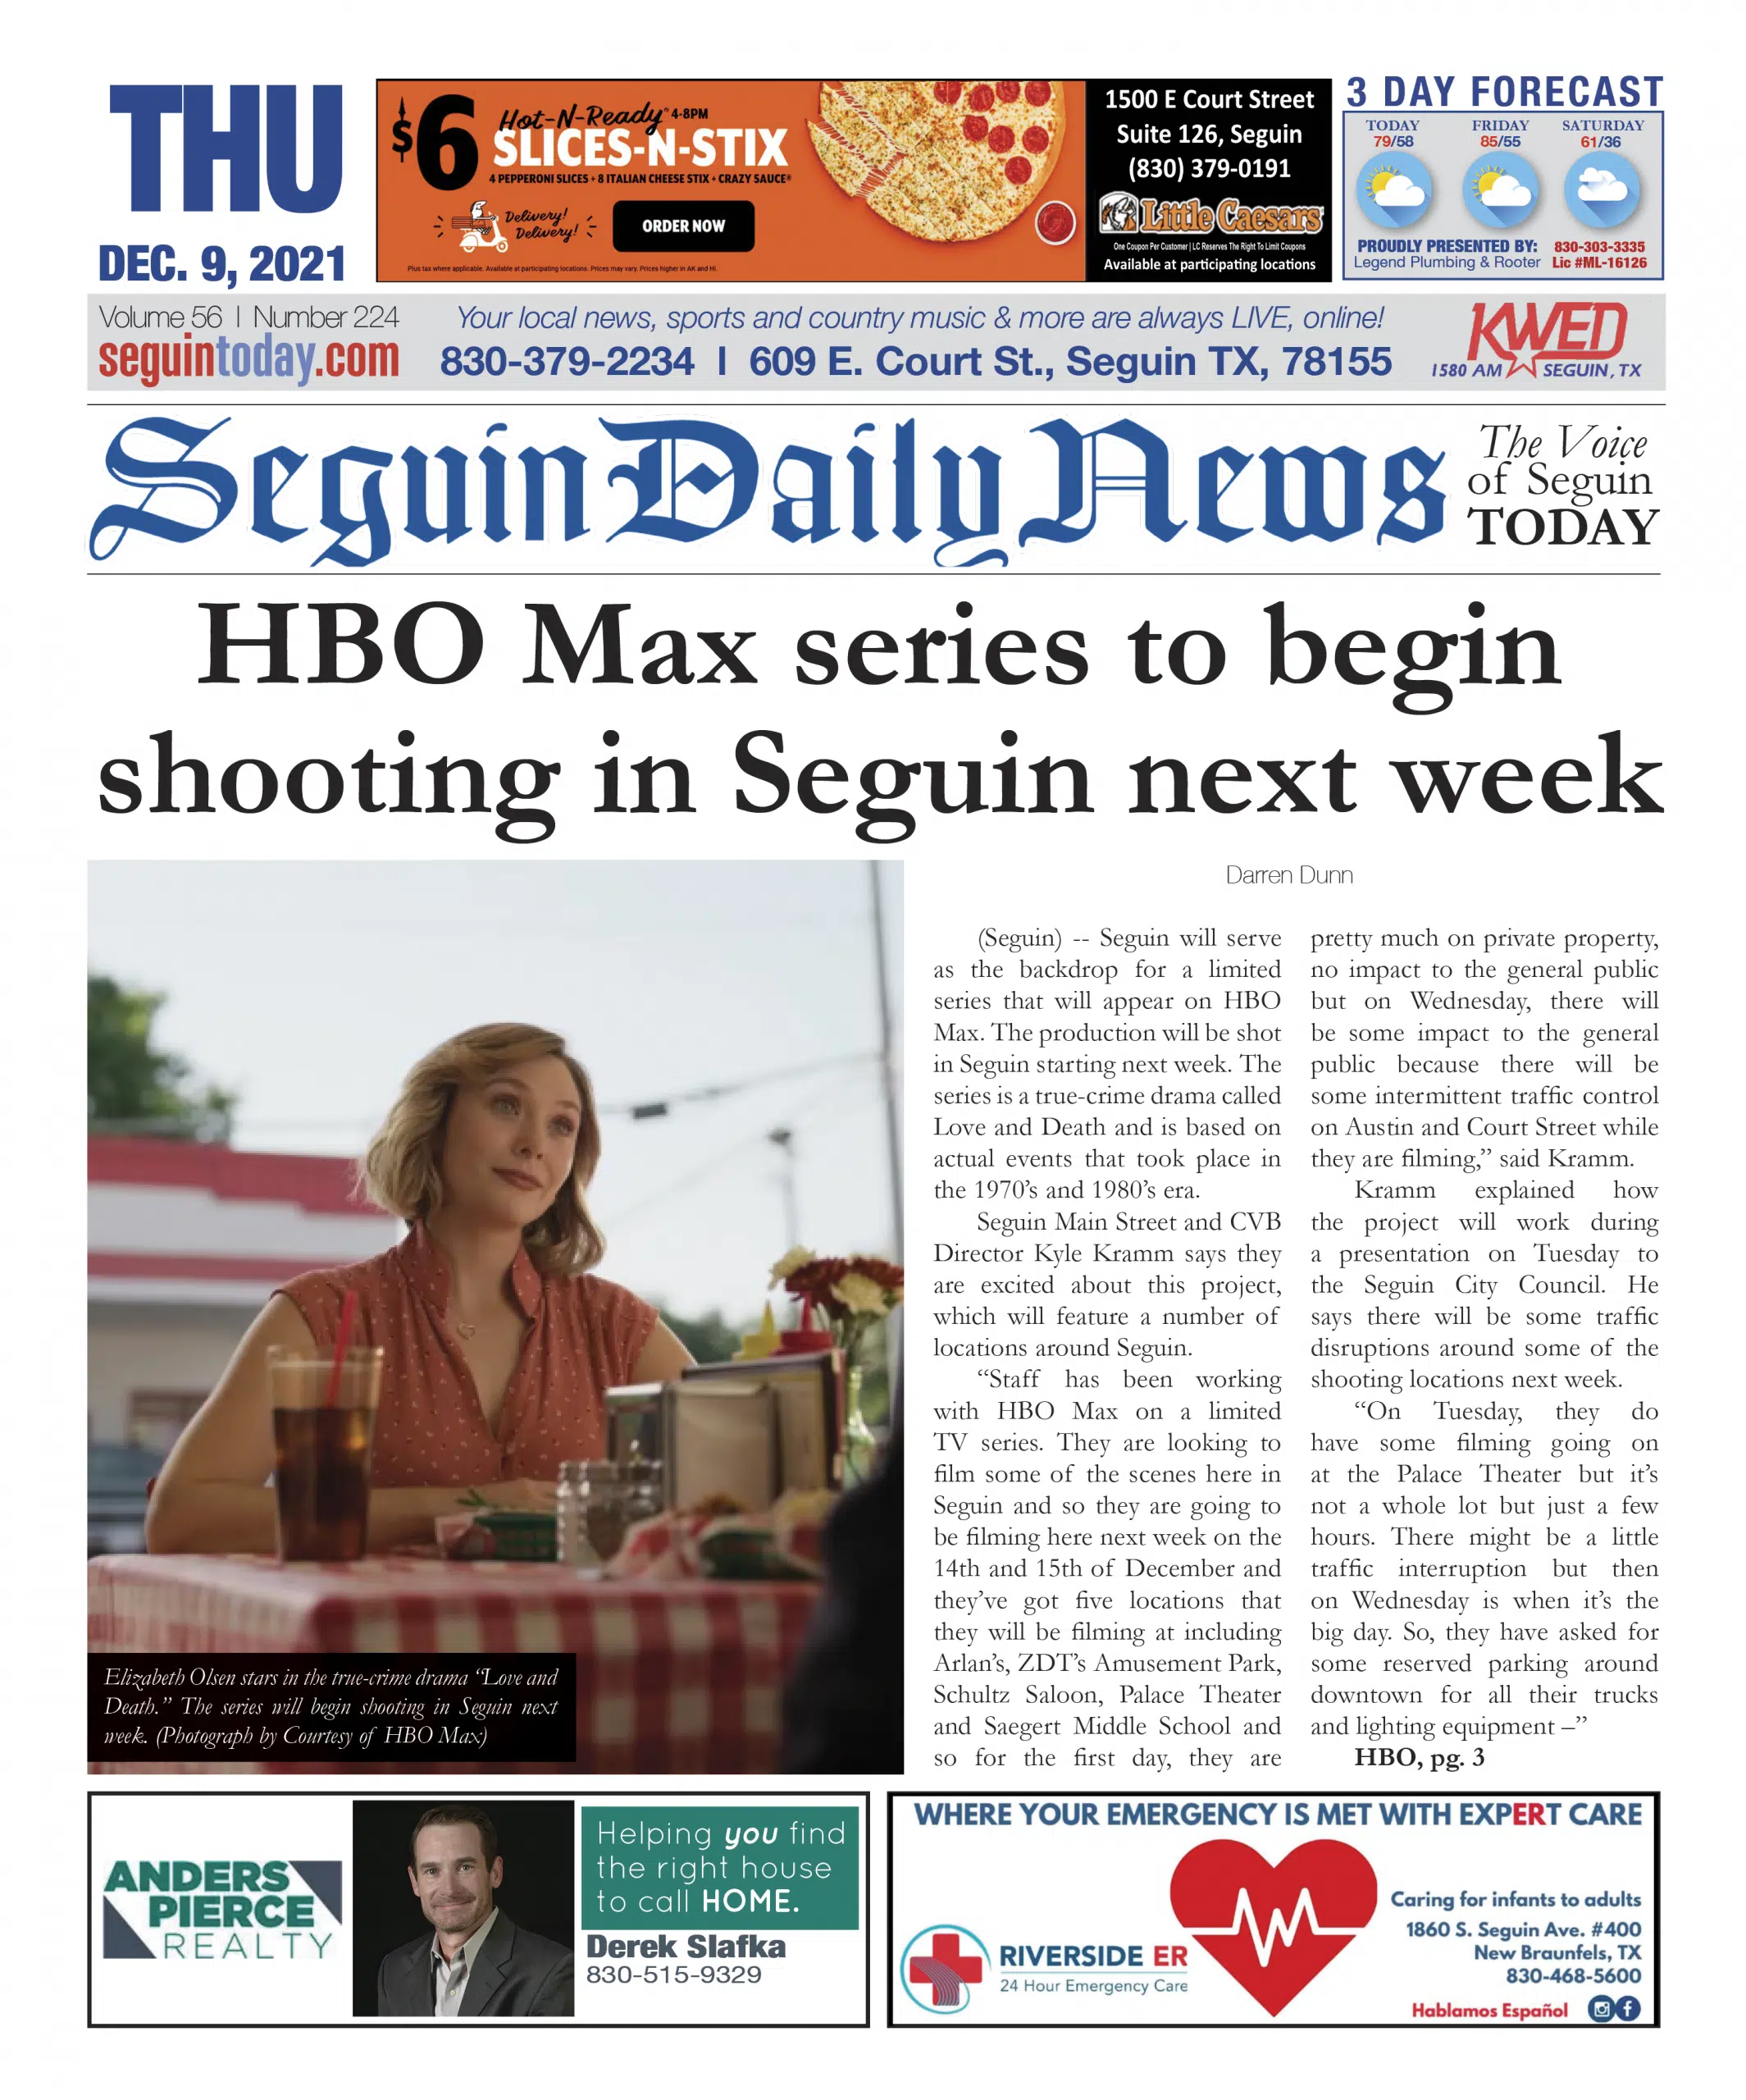 HBO Max series to begin shooting in Seguin next week